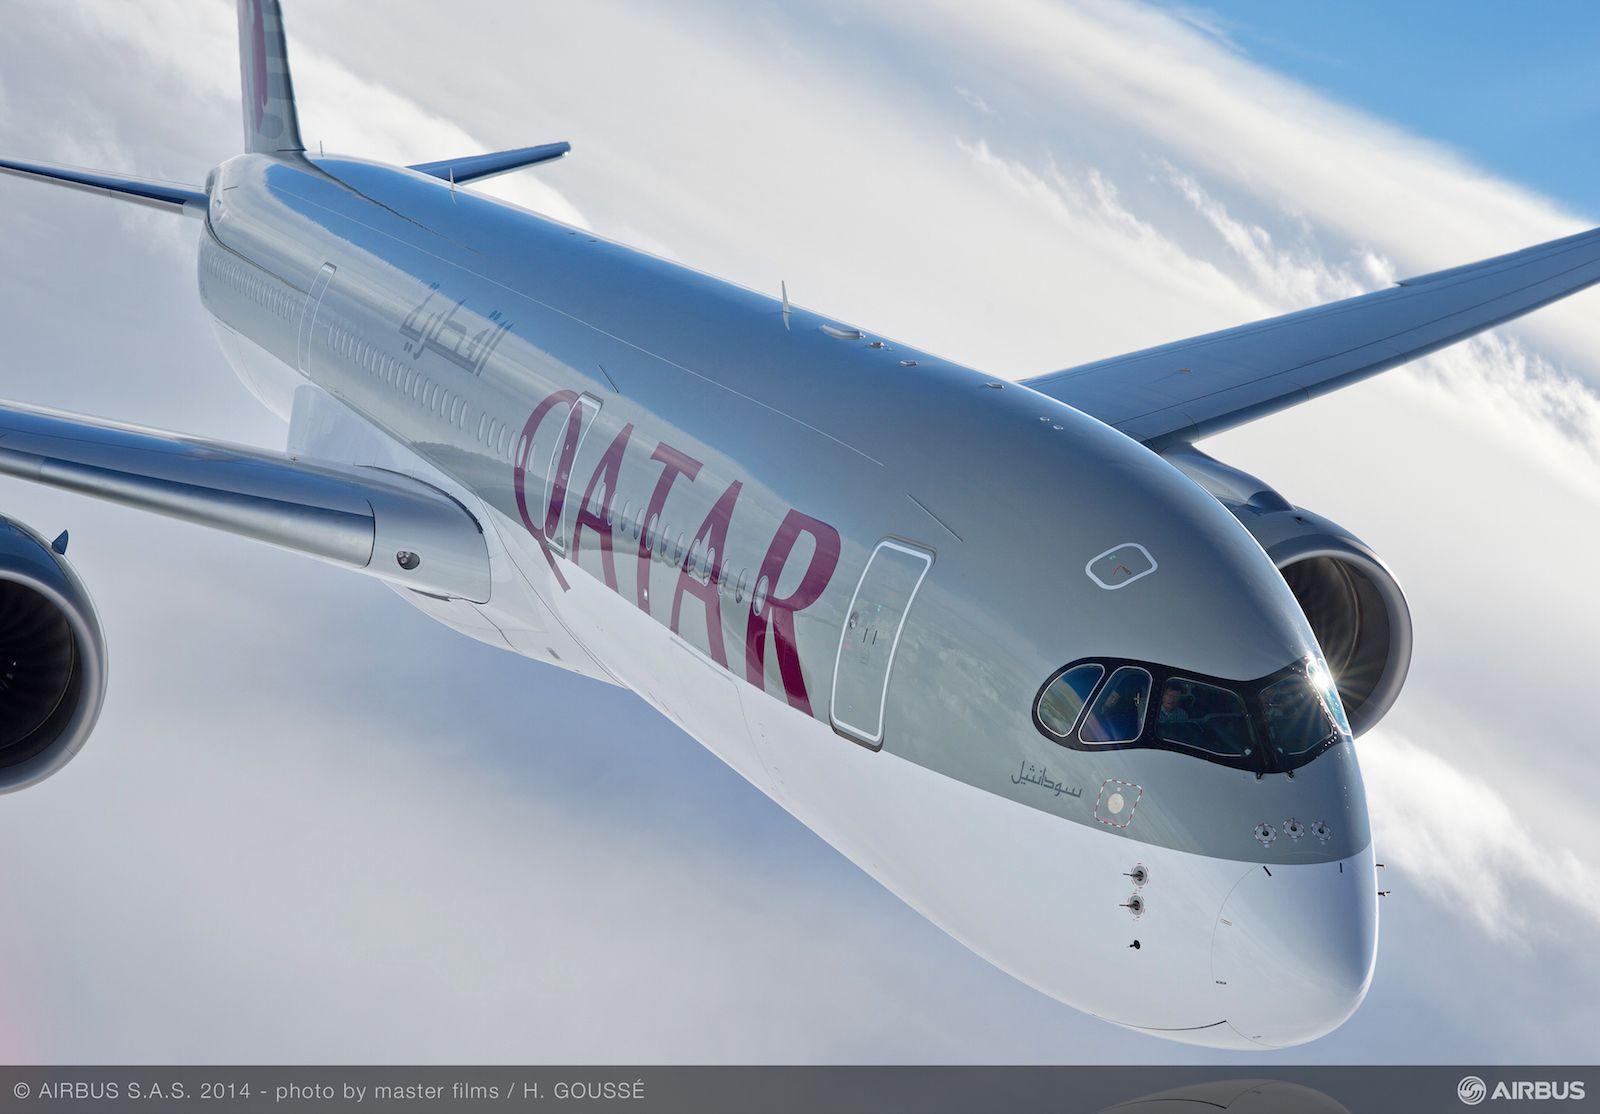 Qatar Airways adds second daily New York JFK flight